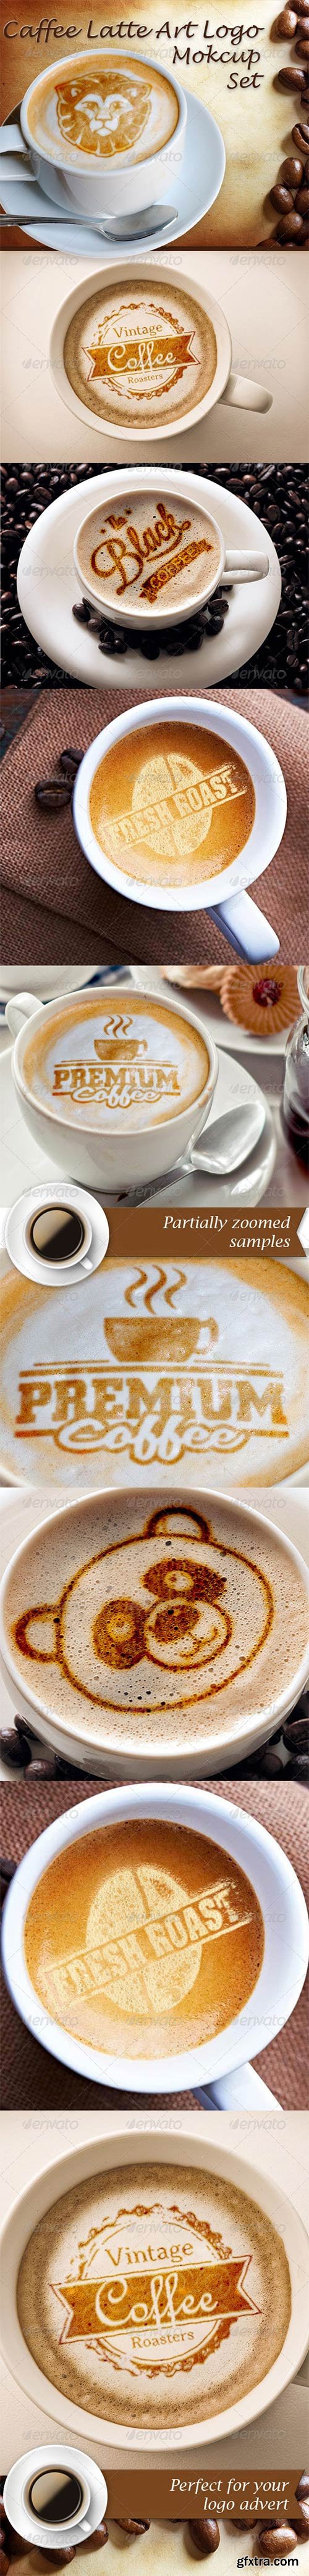 GraphicRiver - Caffee Latte Art Logo Mockup Set